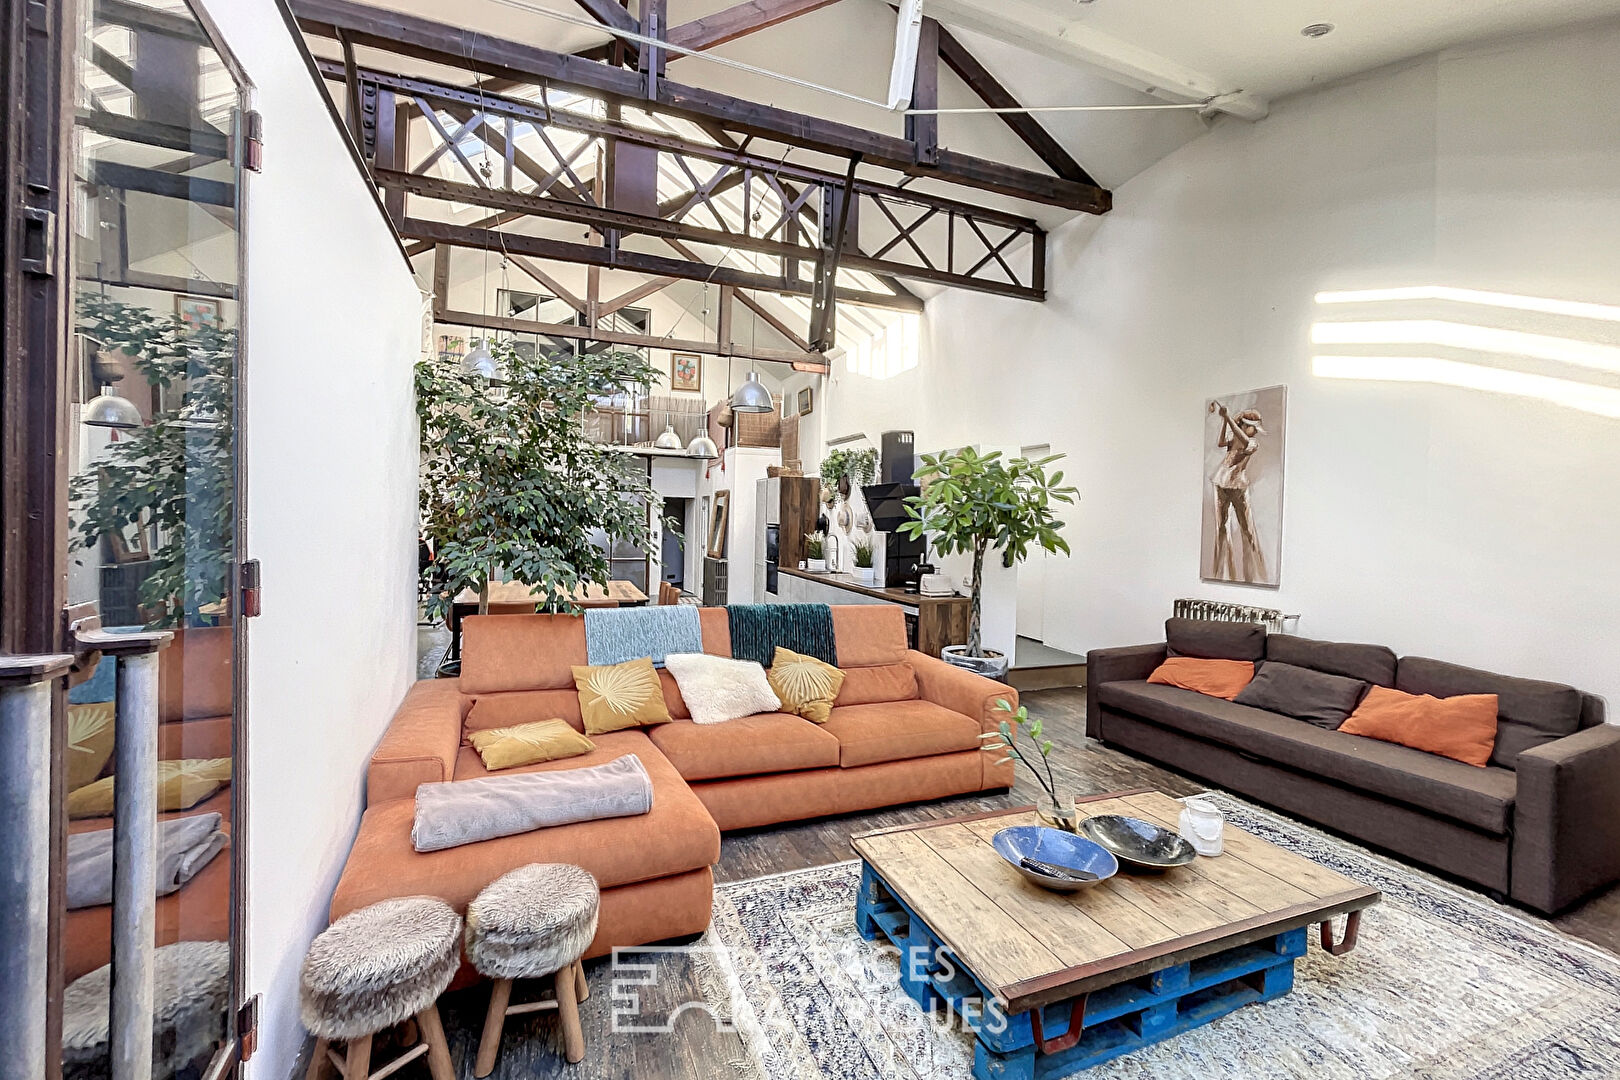 Artist’s studio transformed into a furnished Loft